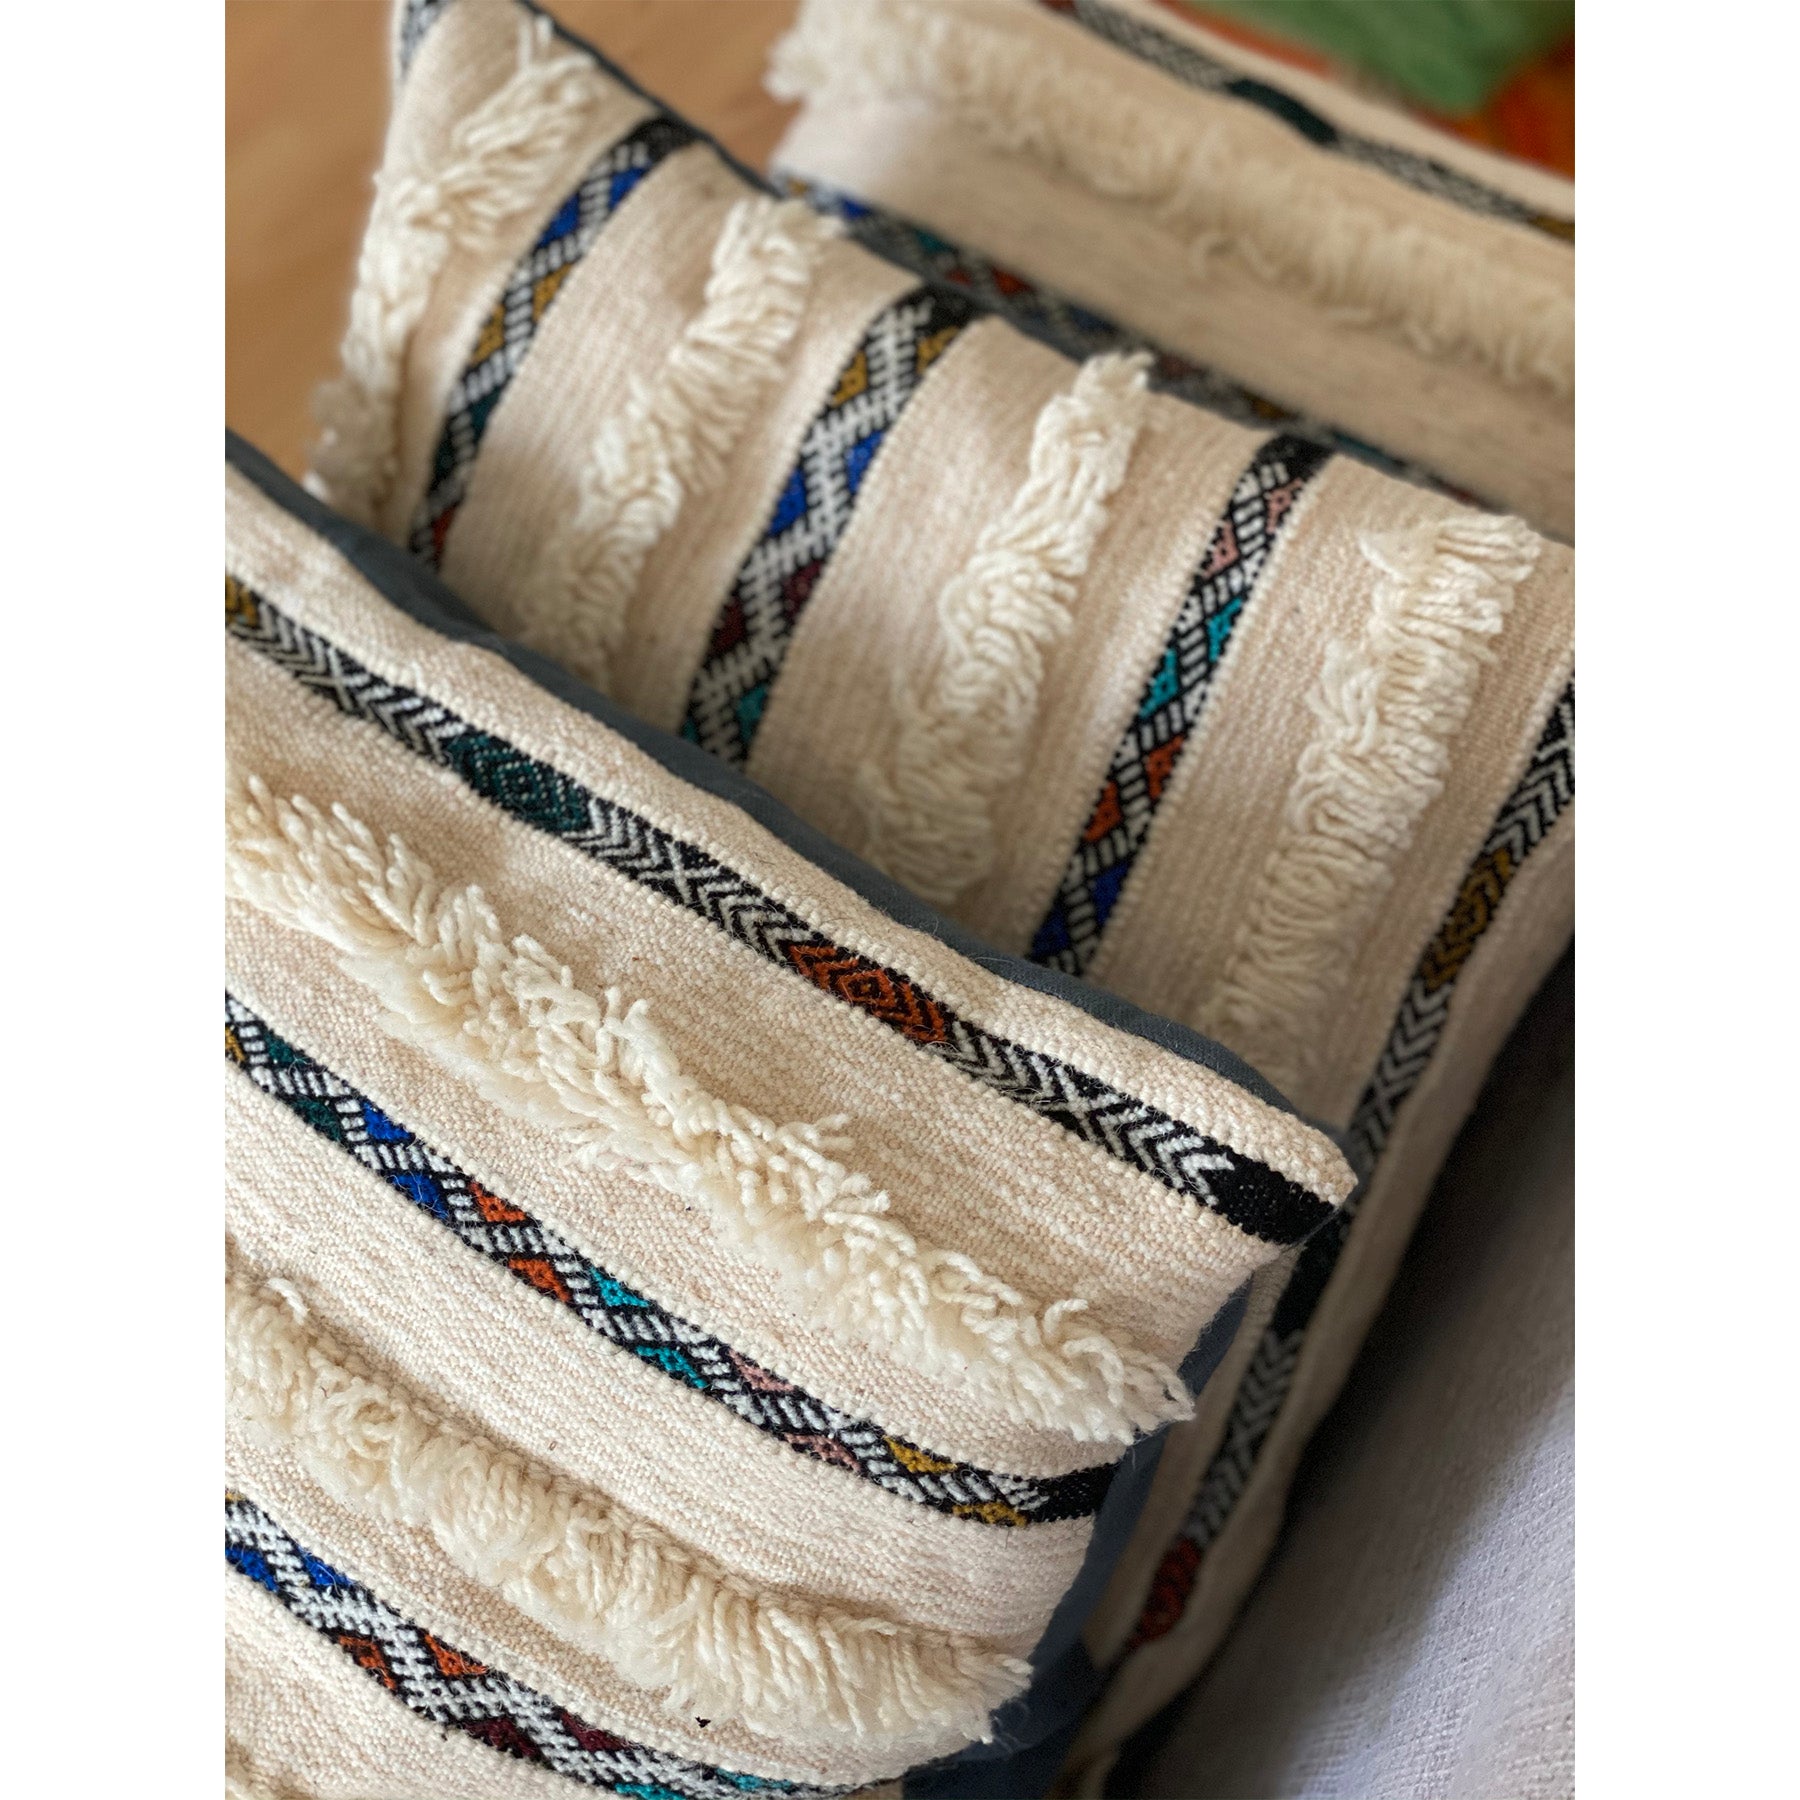 Stack of three colorful Moroccan handira wedding blanket pillows